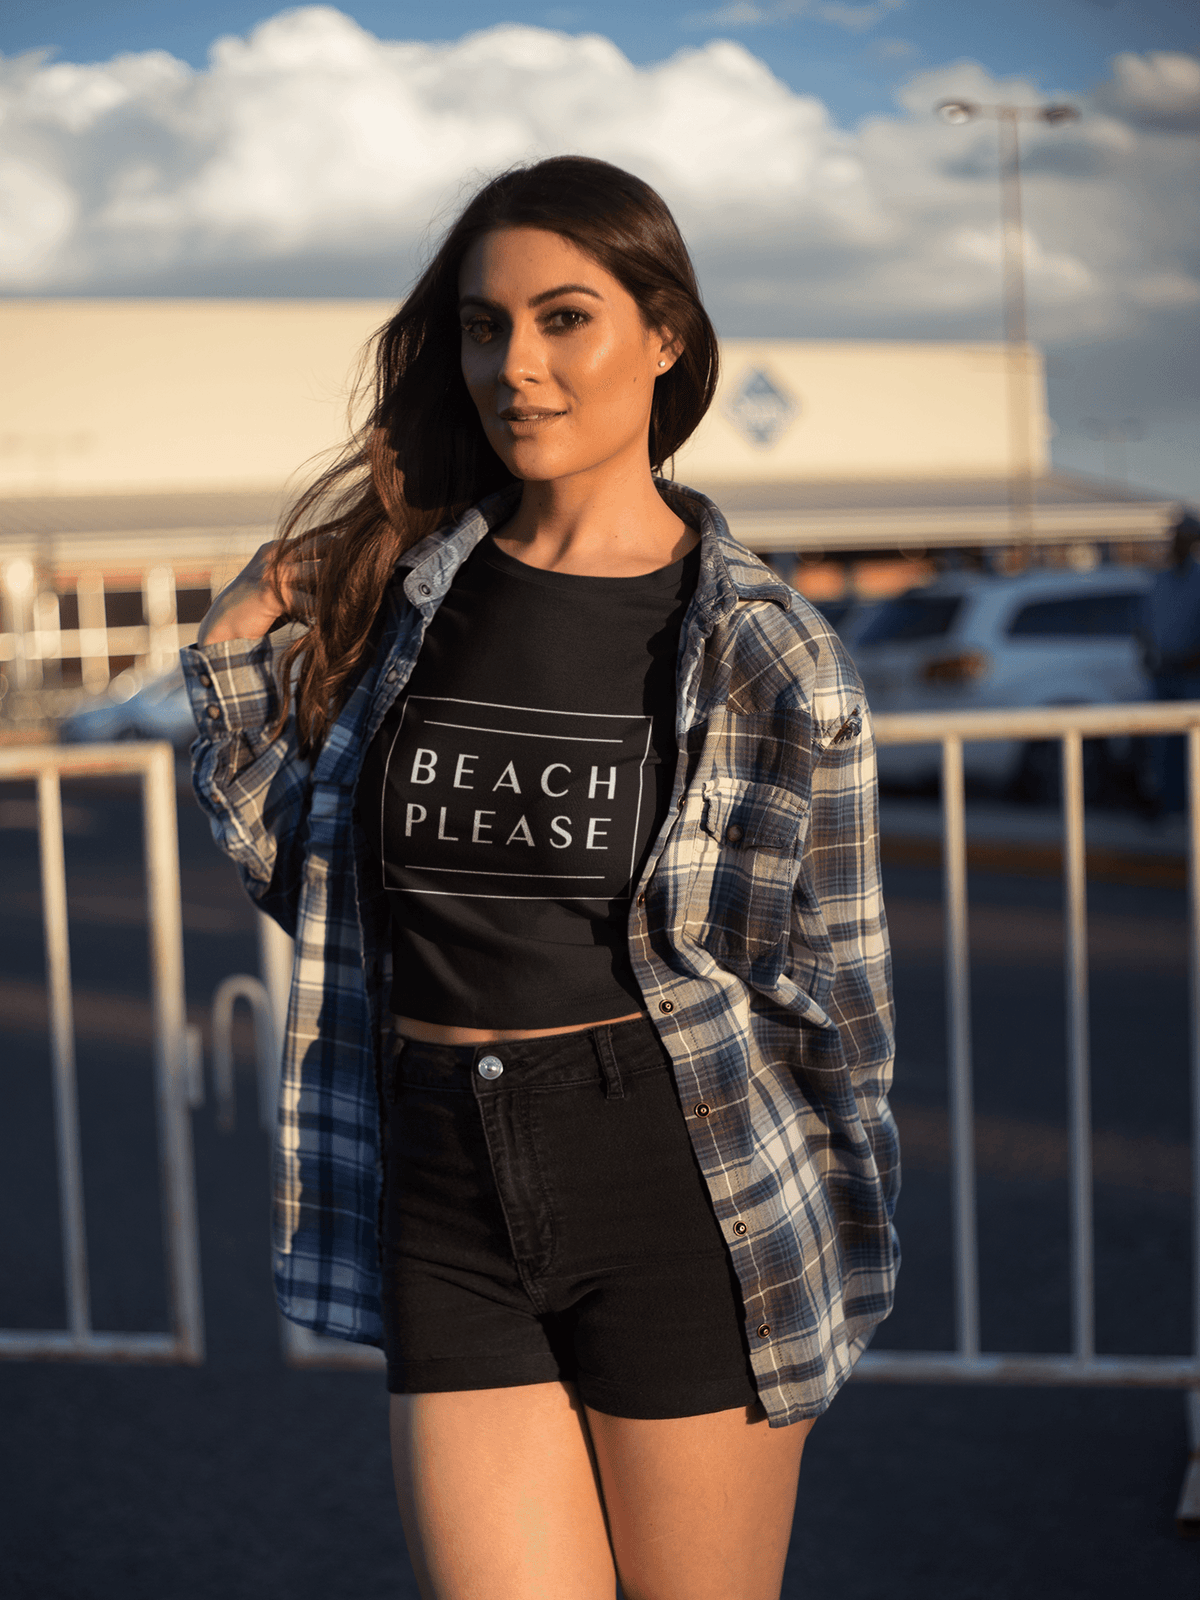 BEACH PLEASE Cropped T-Shirt - StylinArt